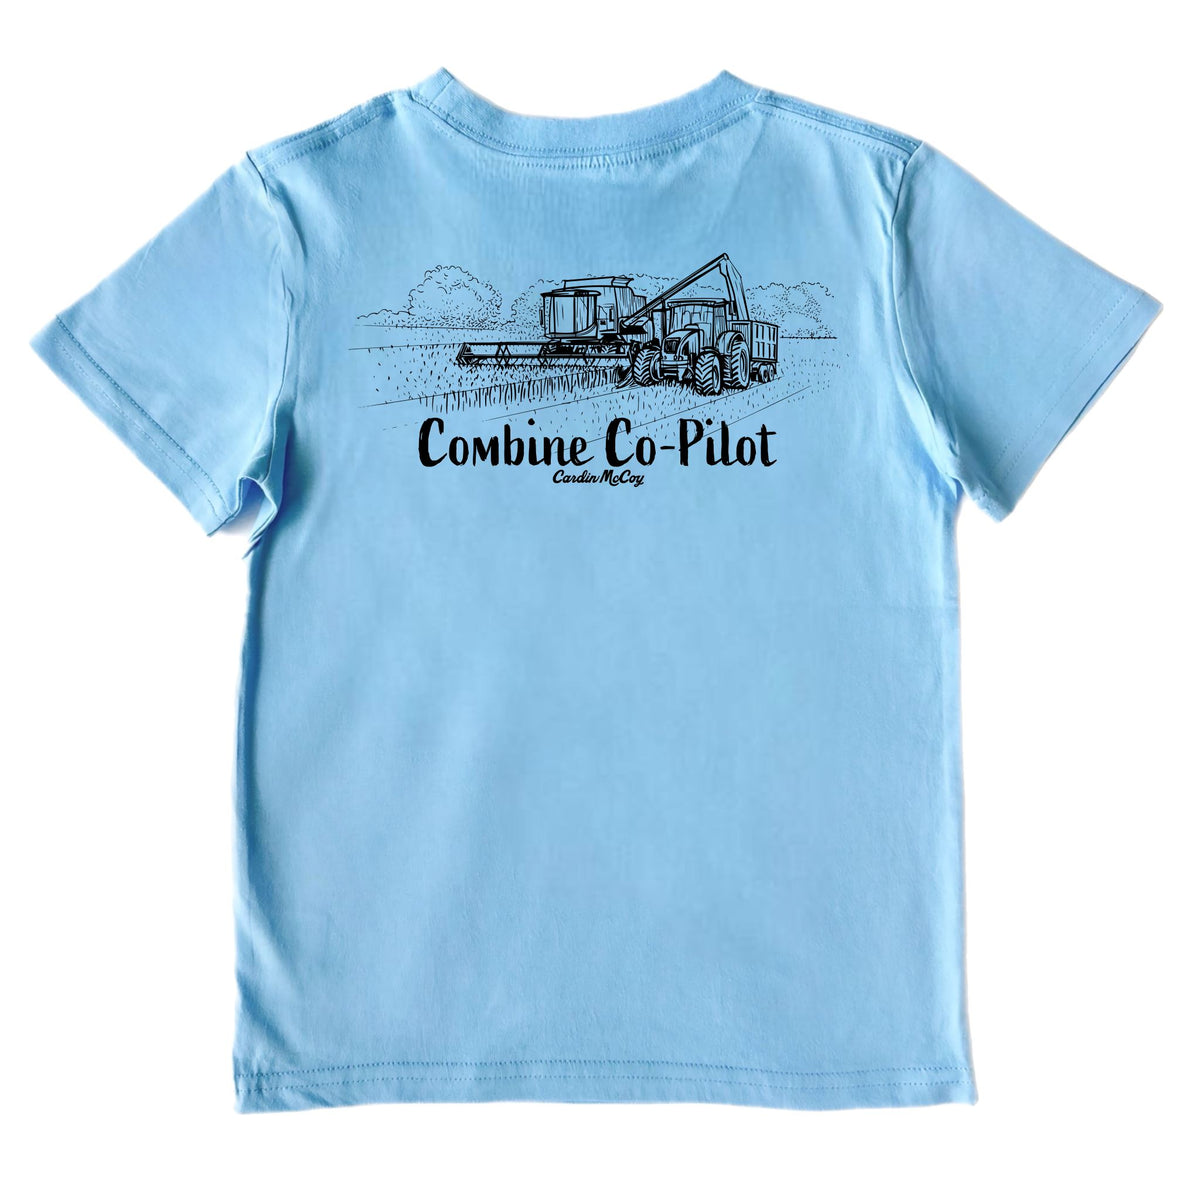 Boys' Combine Co-Pilot Short-Sleeve Tee Short Sleeve T-Shirt Cardin McCoy Light Blue XXS (2/3) Pocket